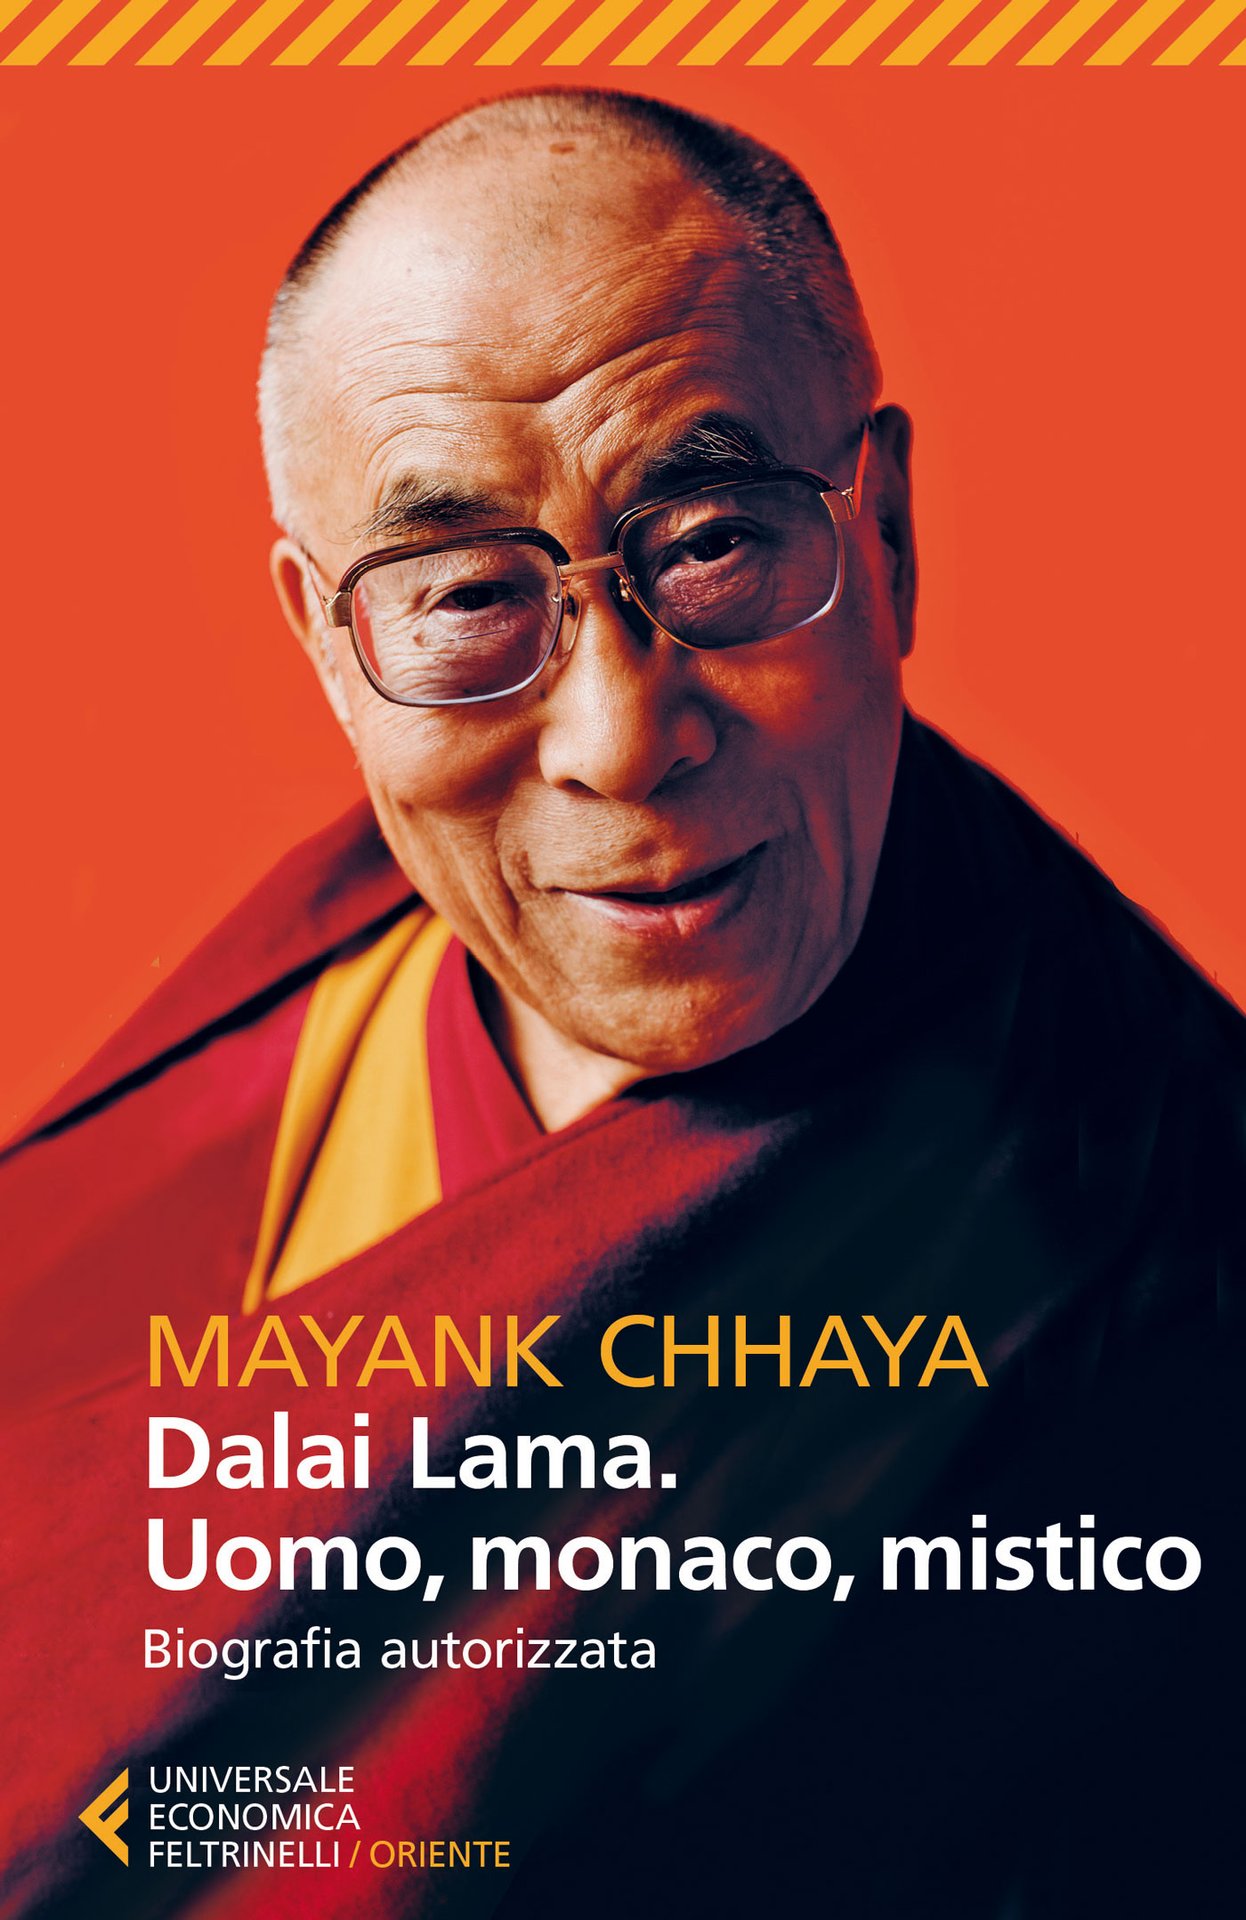 Dalai Lama. Uomo, monaco, mistico